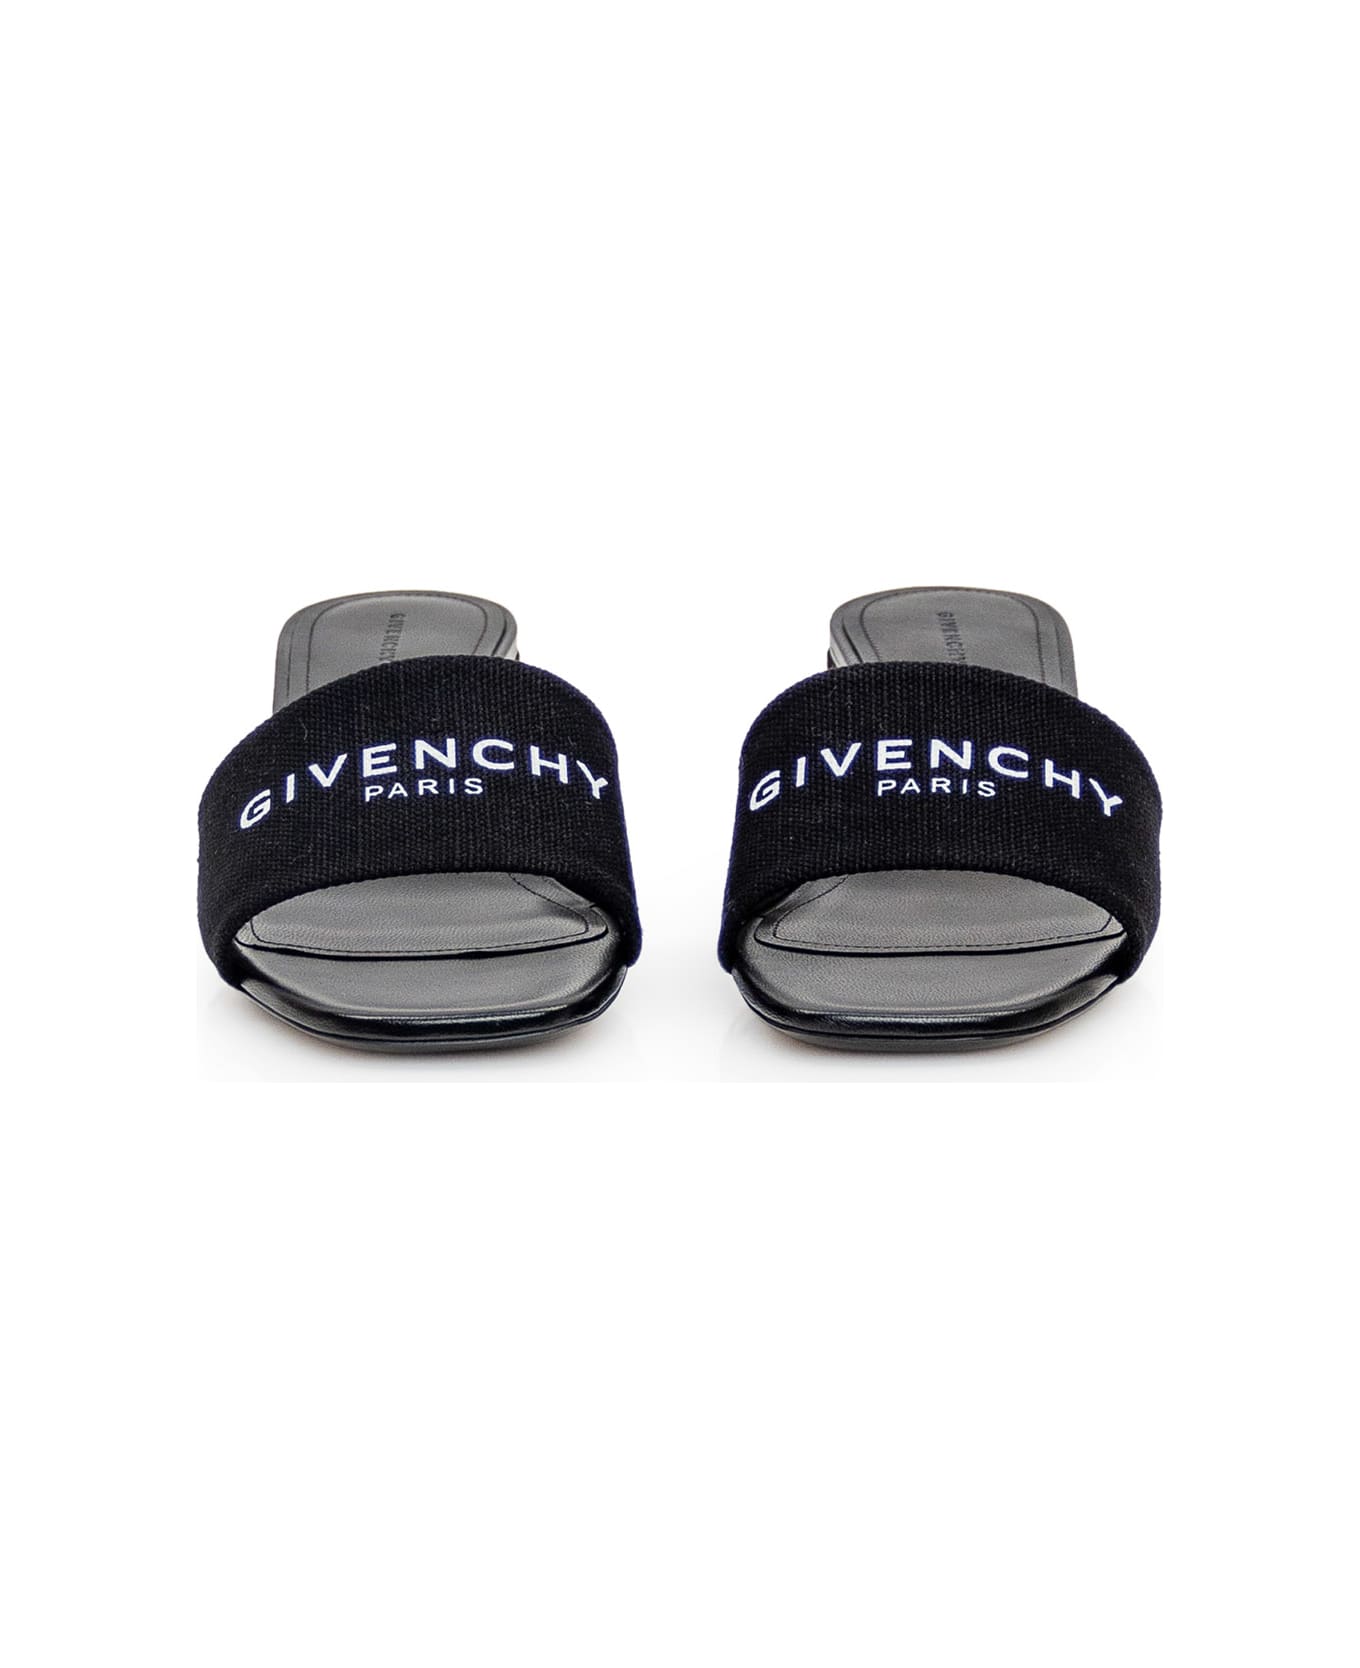 Givenchy 4g Sandals - black サンダル